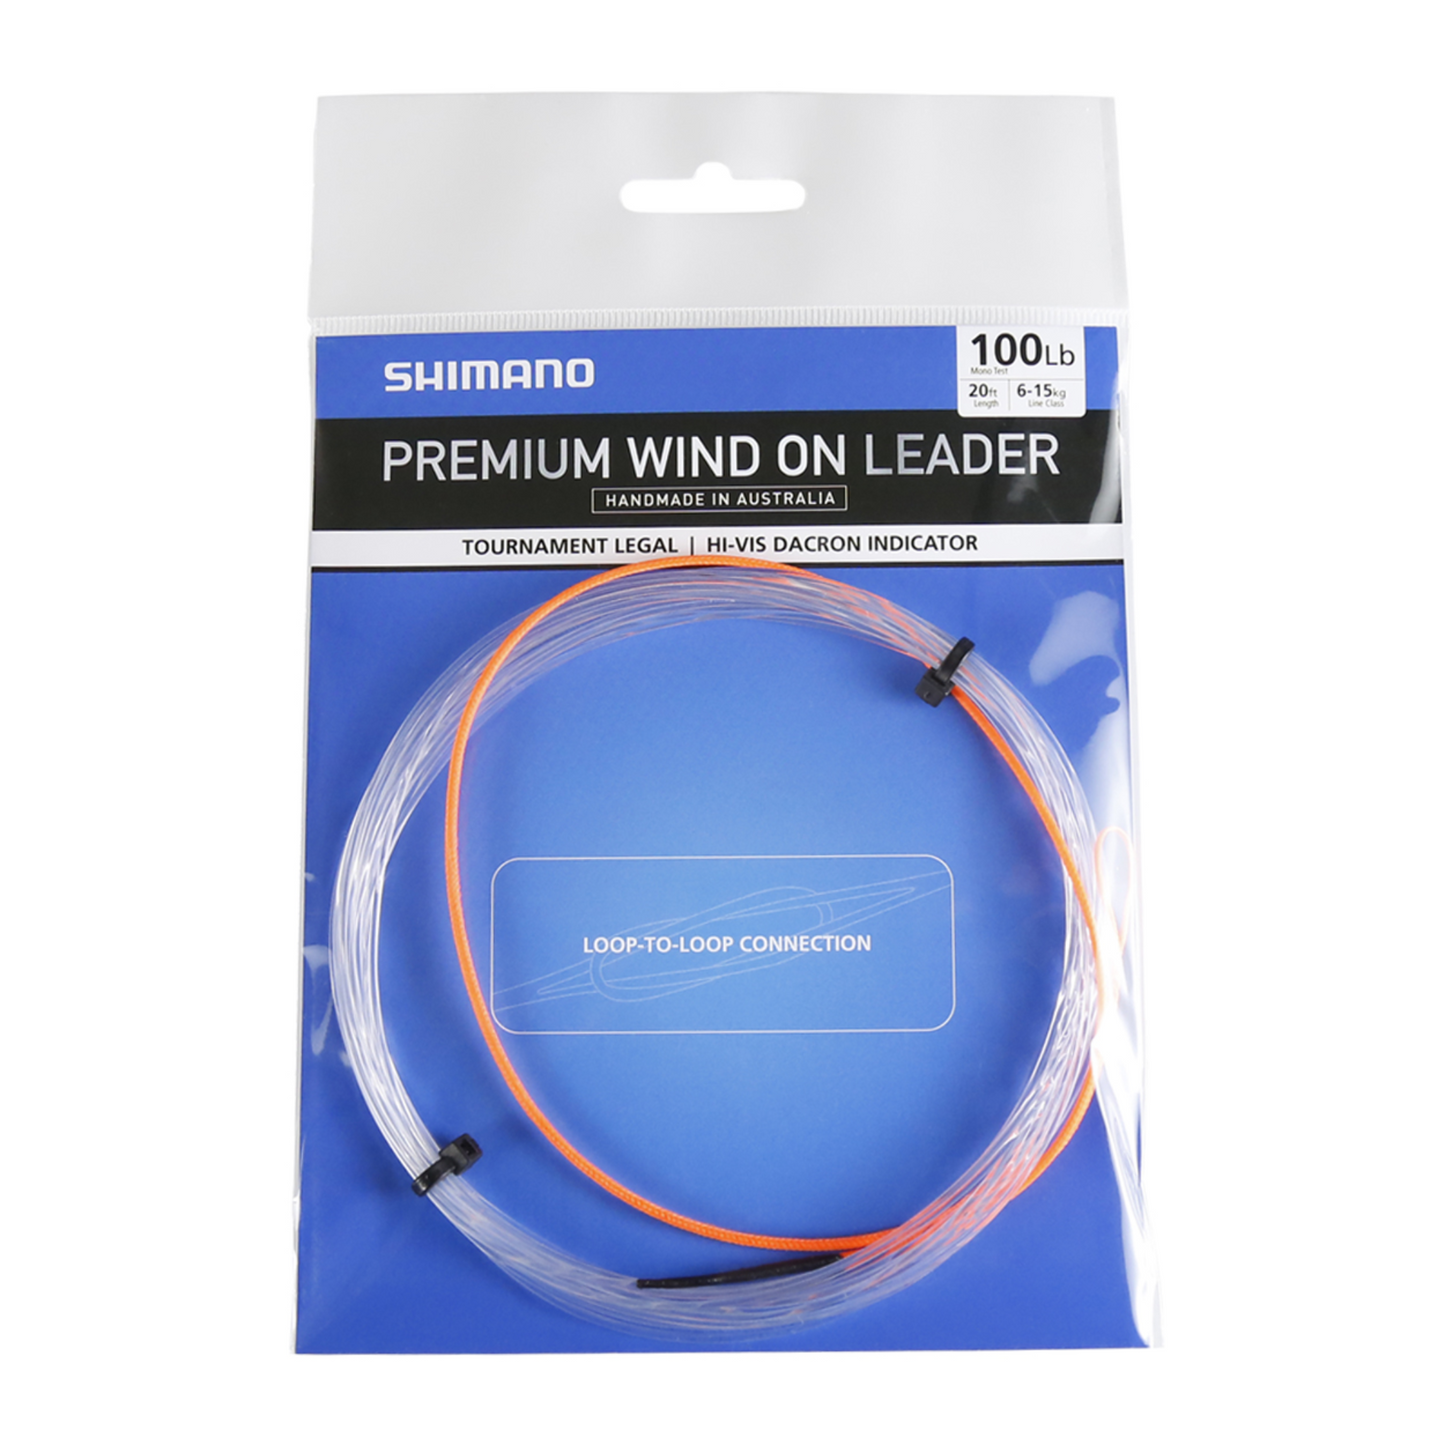 Shimano Premium Wind on Leader Fishing Line (Lifestyle Gear)